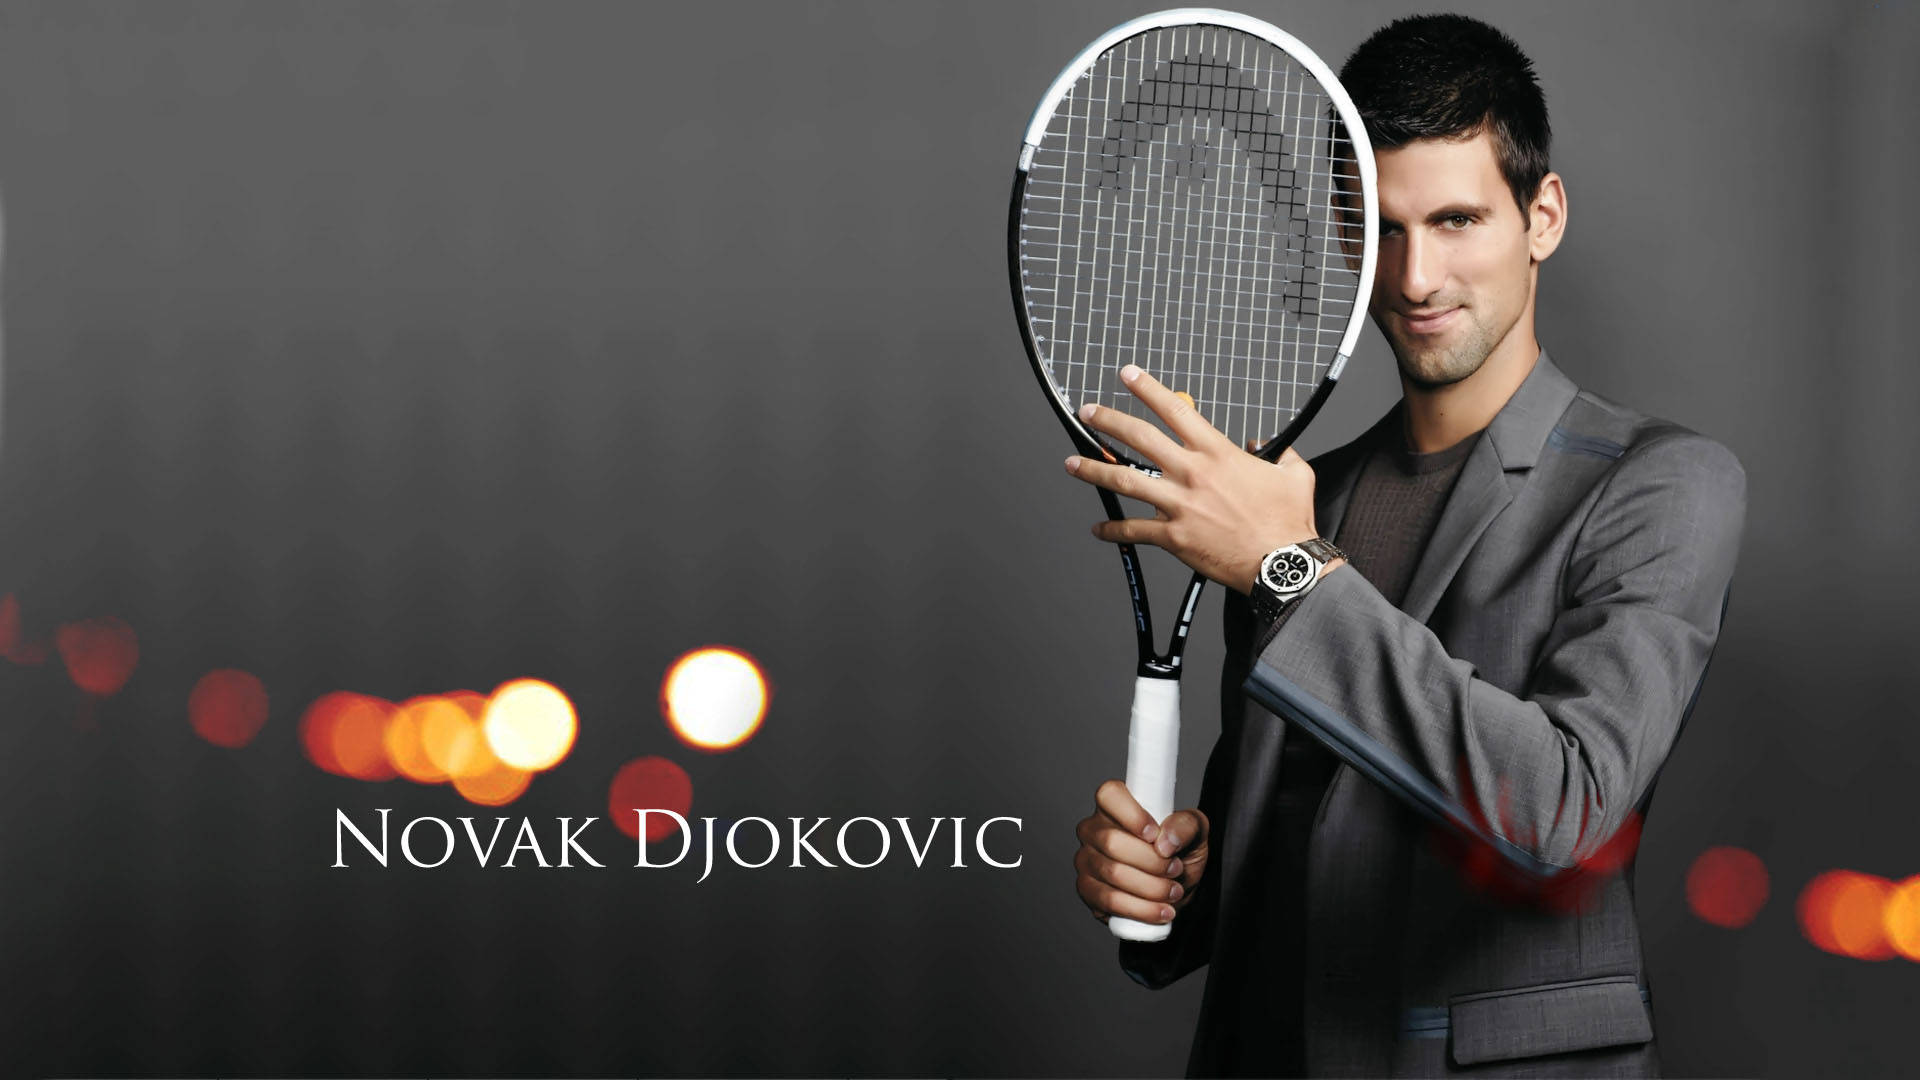 Novak Djokovic Background Photos